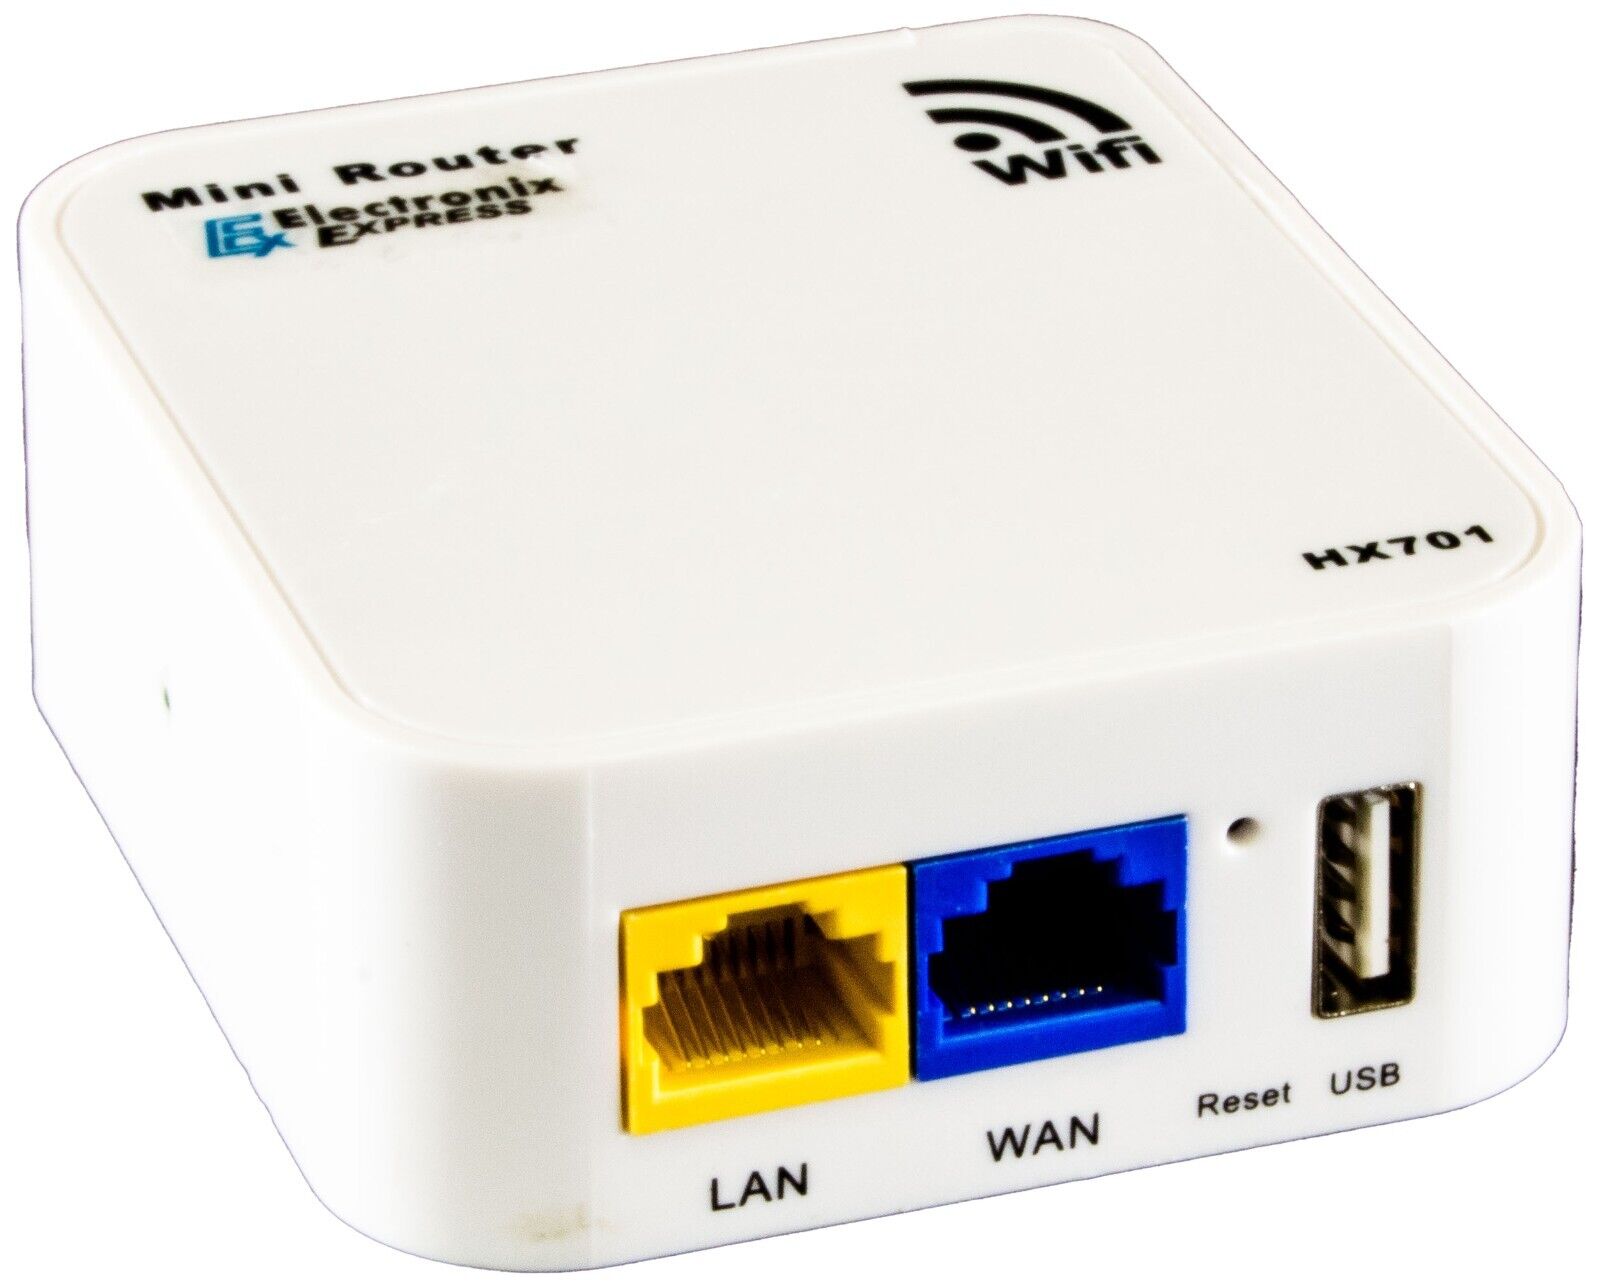 150Mbps Wireless N Mini Pocket Router, Repeater, 2 LAN Ports, USB Port (HX701)